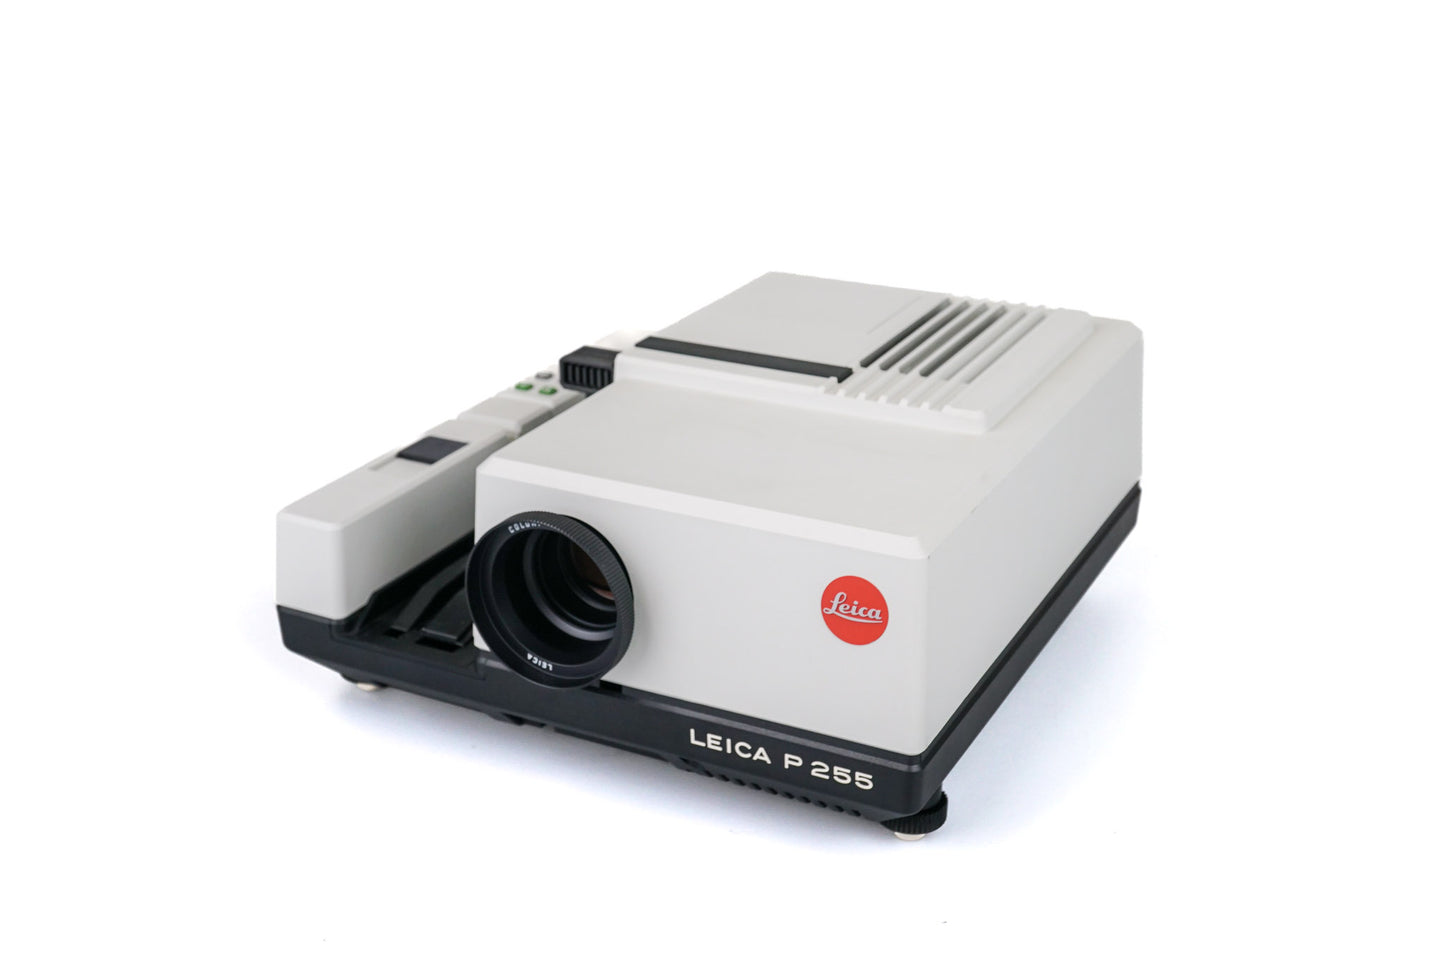 Leica P255 Slide Projector